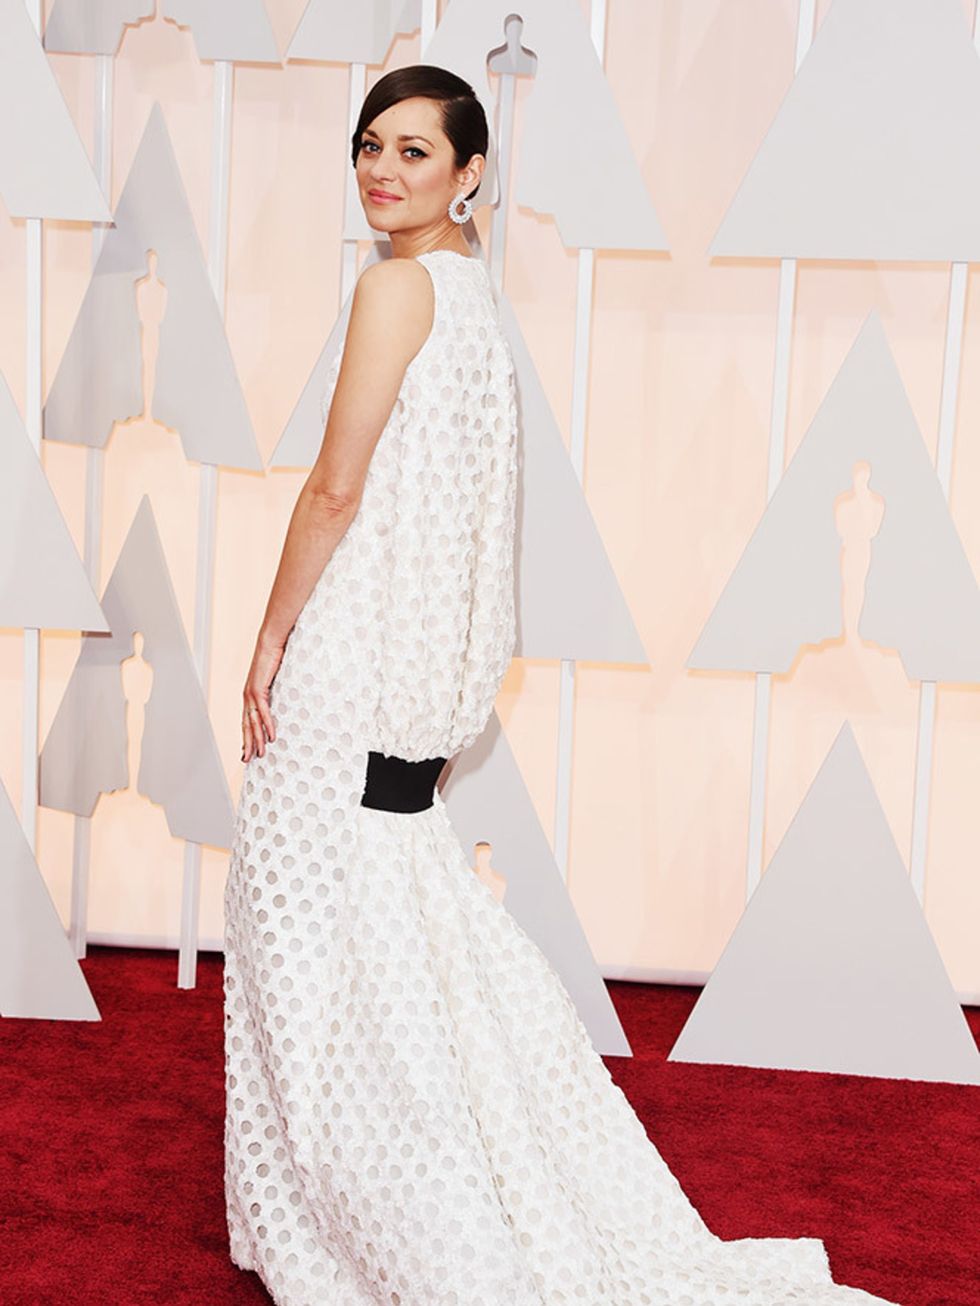 Marion Cotillard wears Christian Dior at the 2015 Oscars.